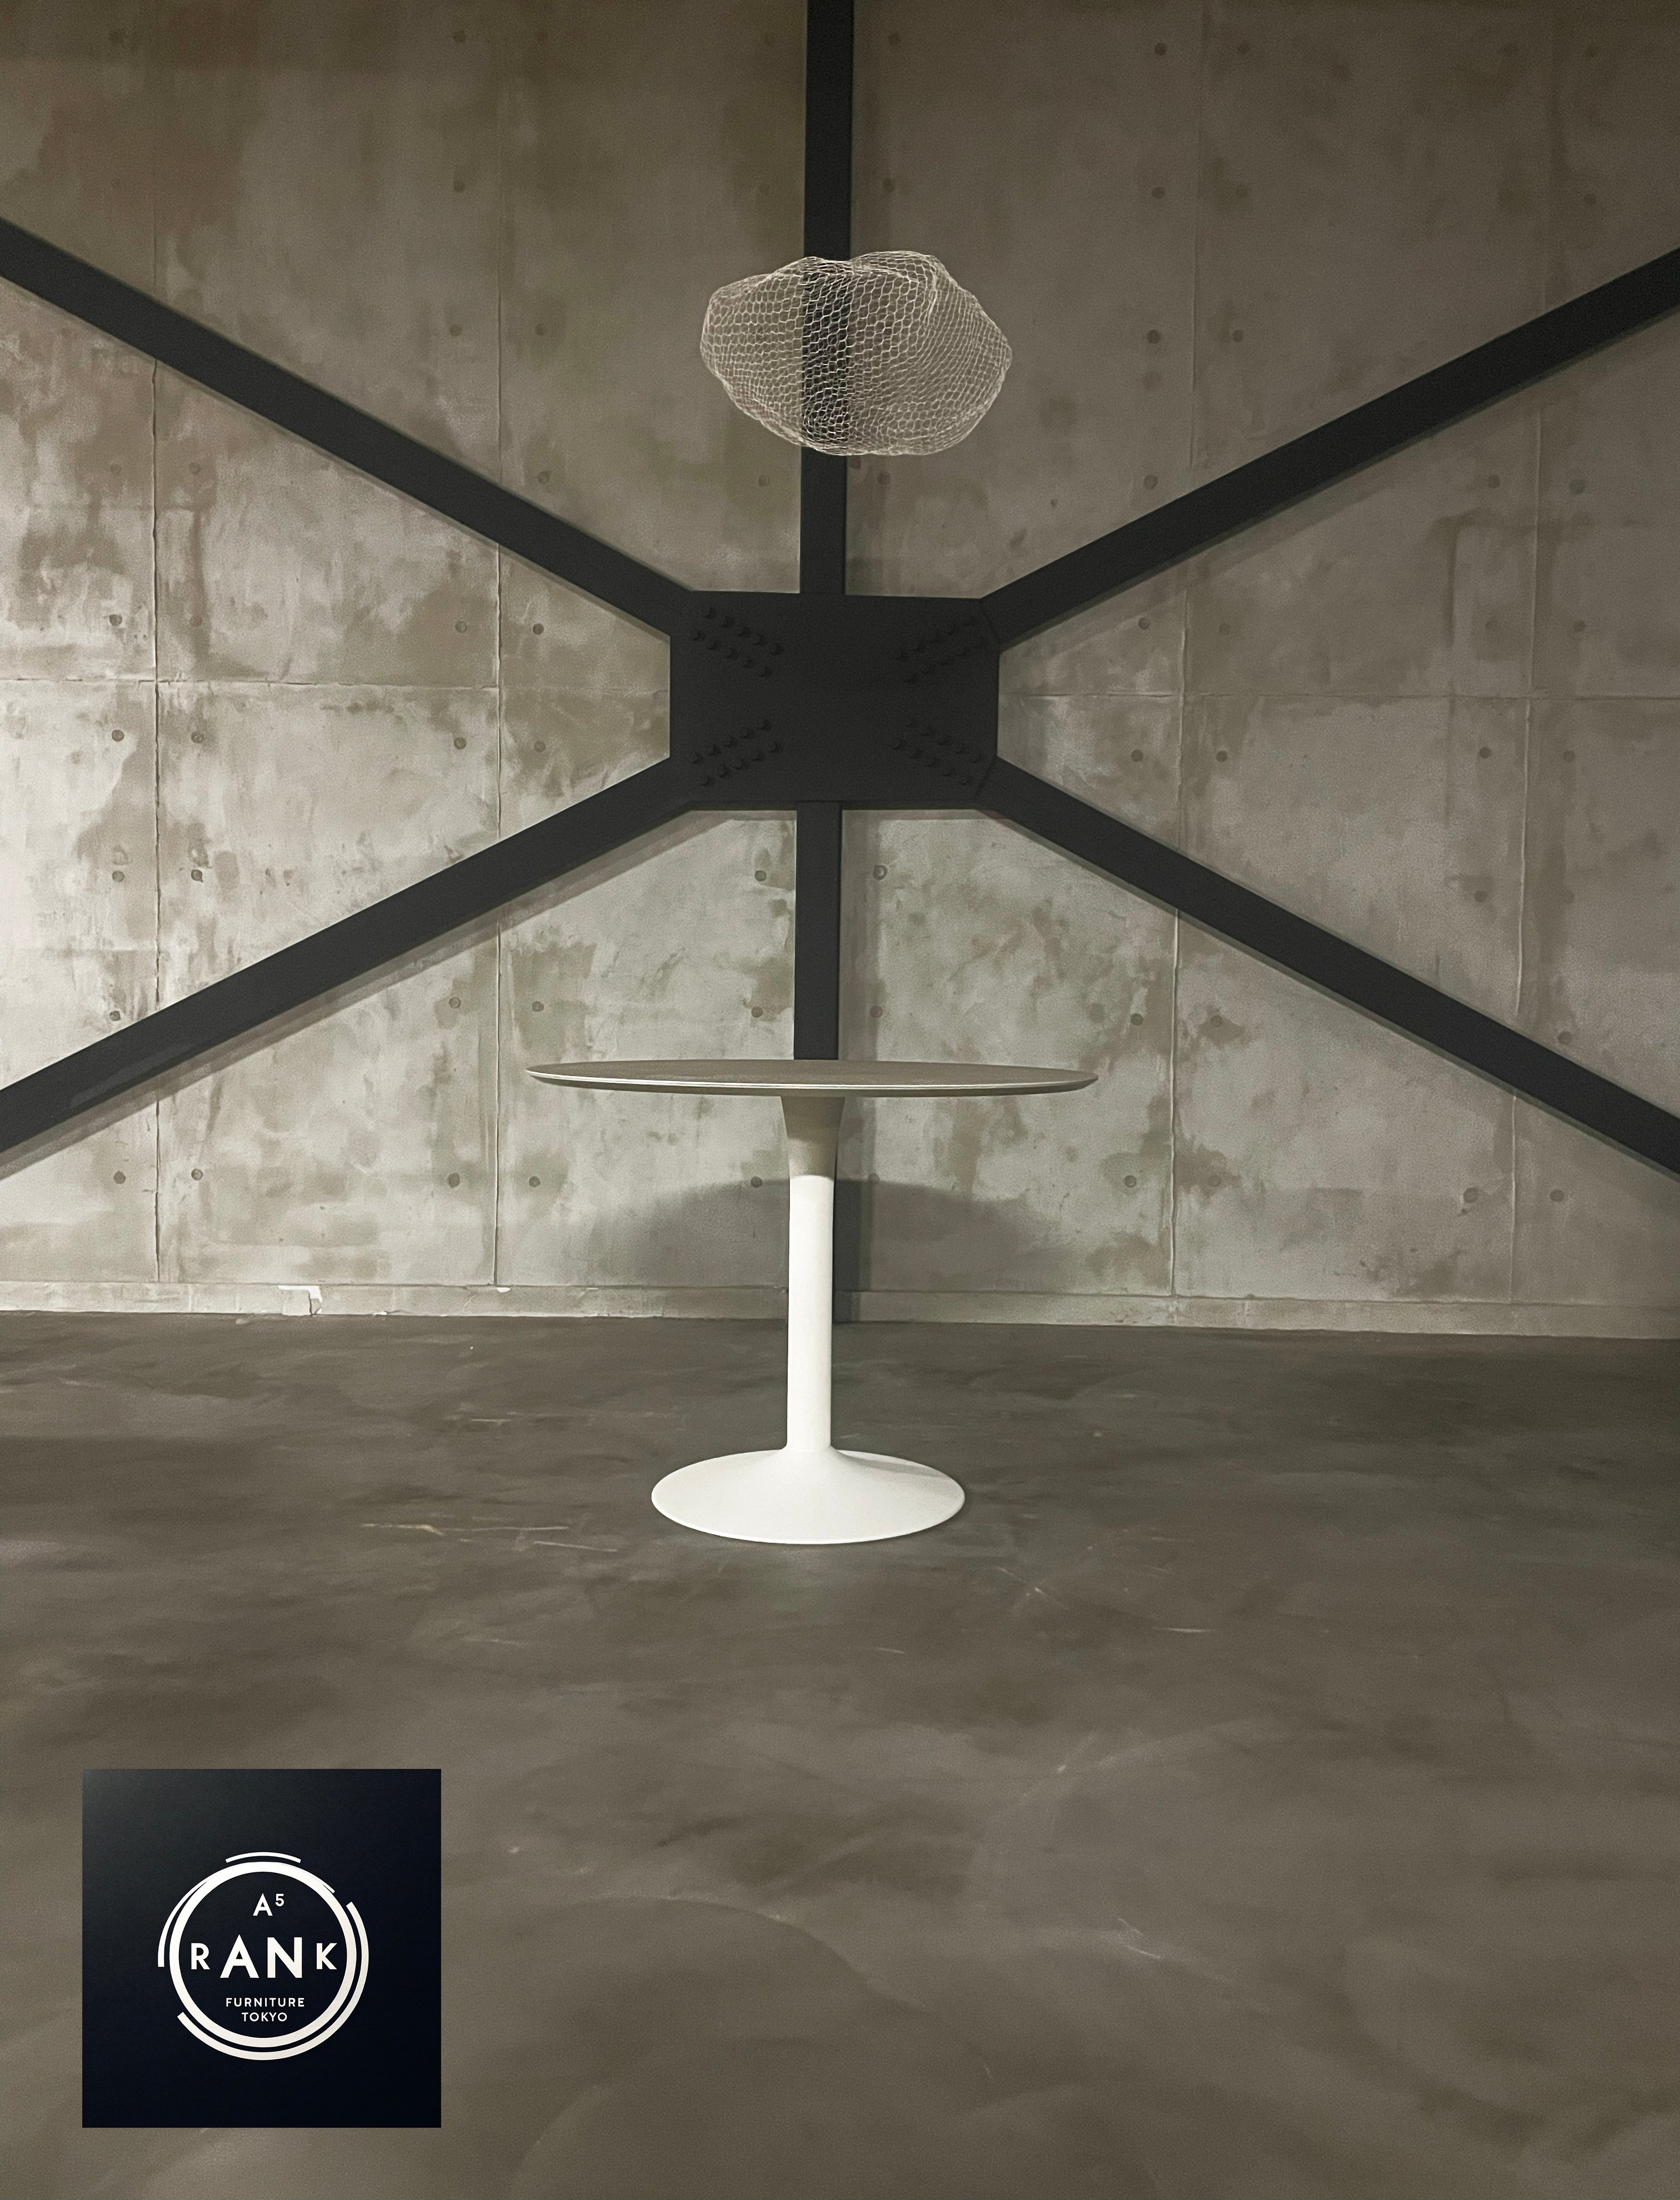 Bo concept NEW YORK セラミックテーブル – A5rank Furniture.TOKYO